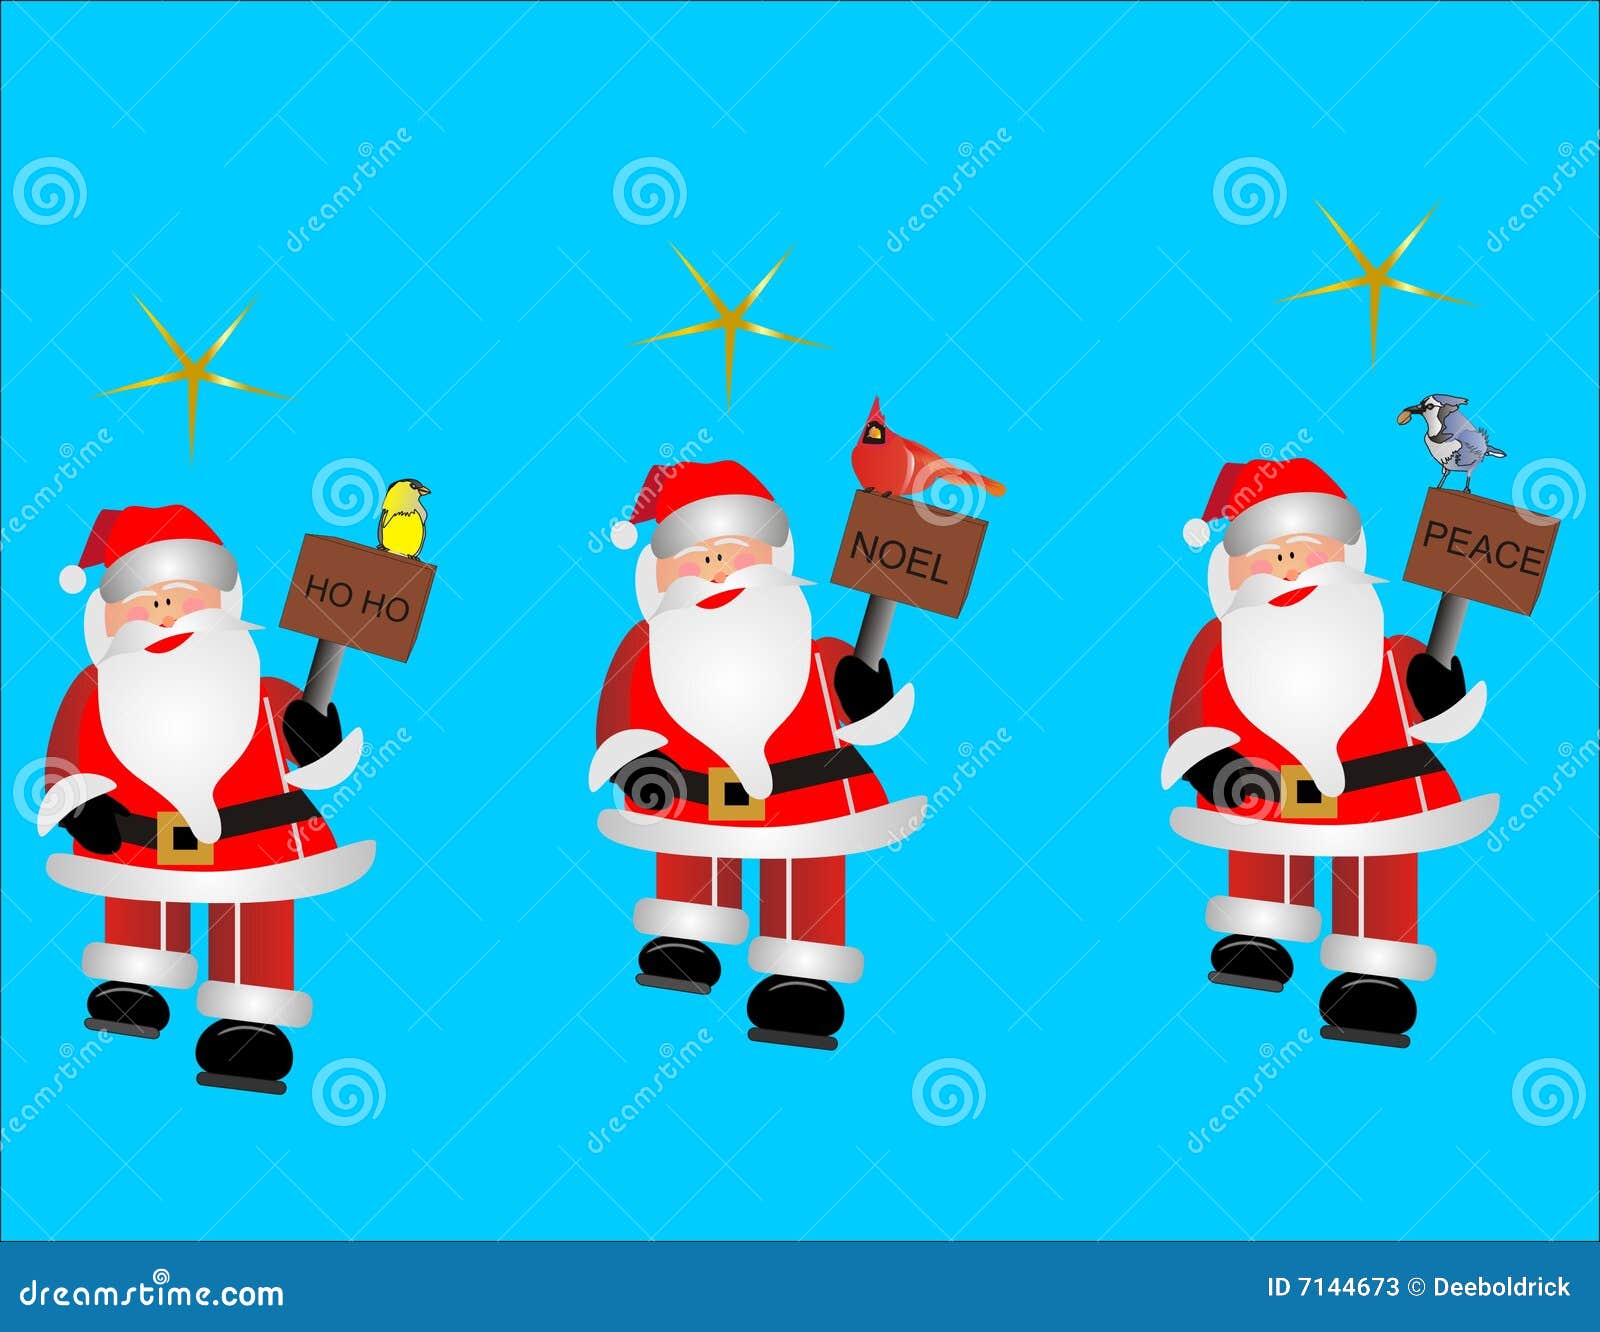 3 Santa clip arts. 3 Santas with birds and signs with different sayings walking along..